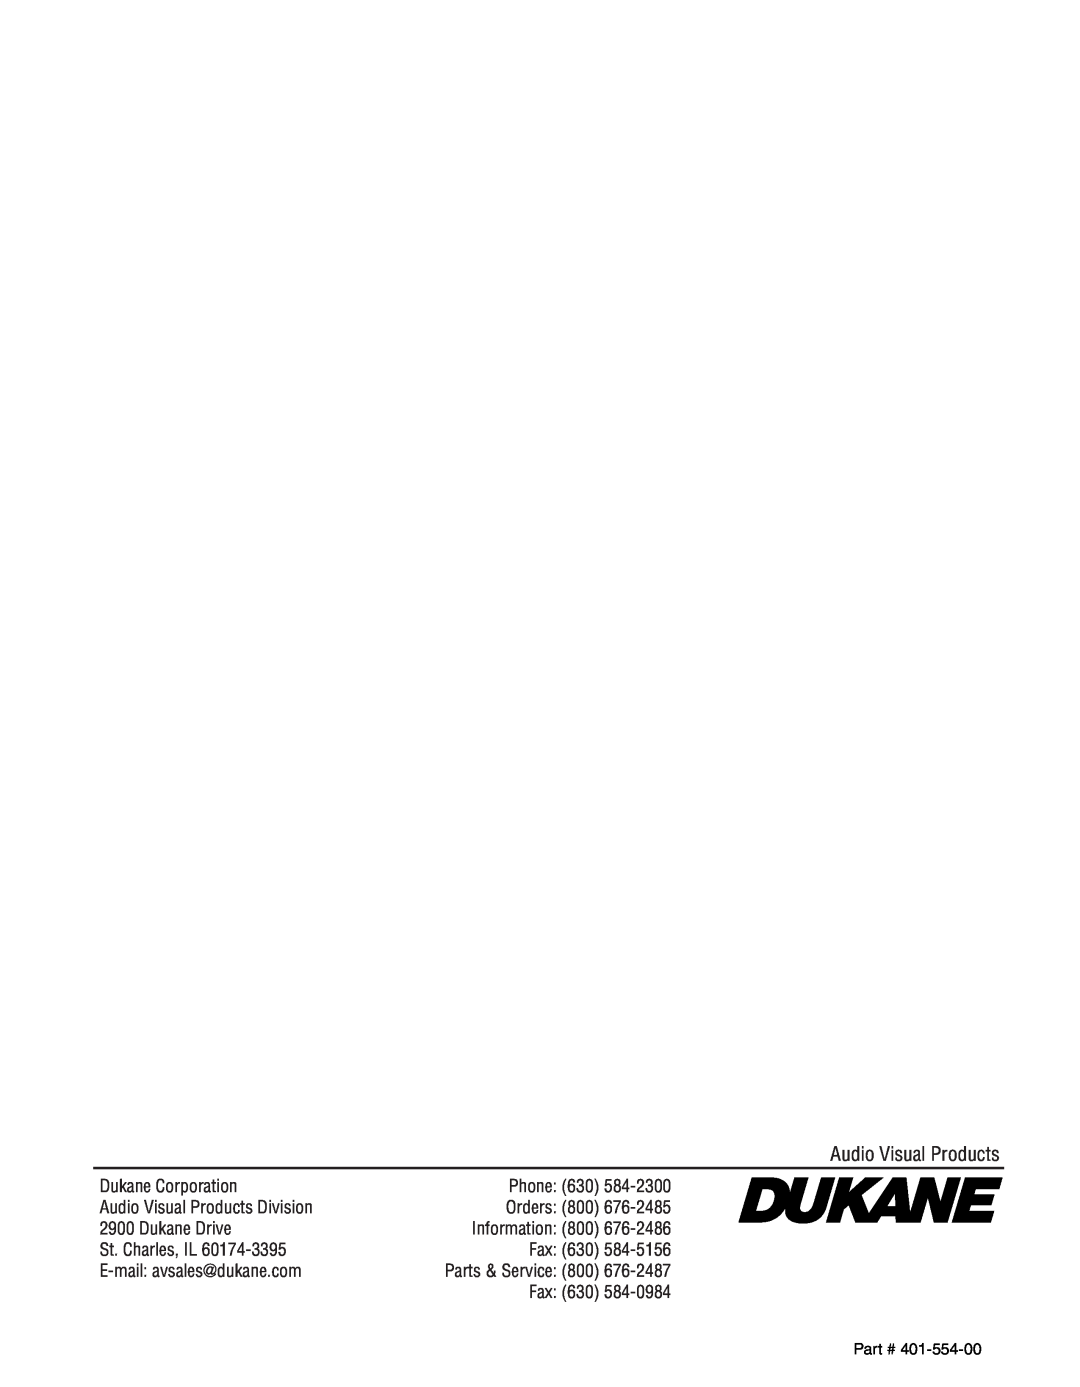 Dukane 28A8040 manual Audio Visual Products, 676-2486, 584-5156, Parts & Service, 676-2487, 584-0984 